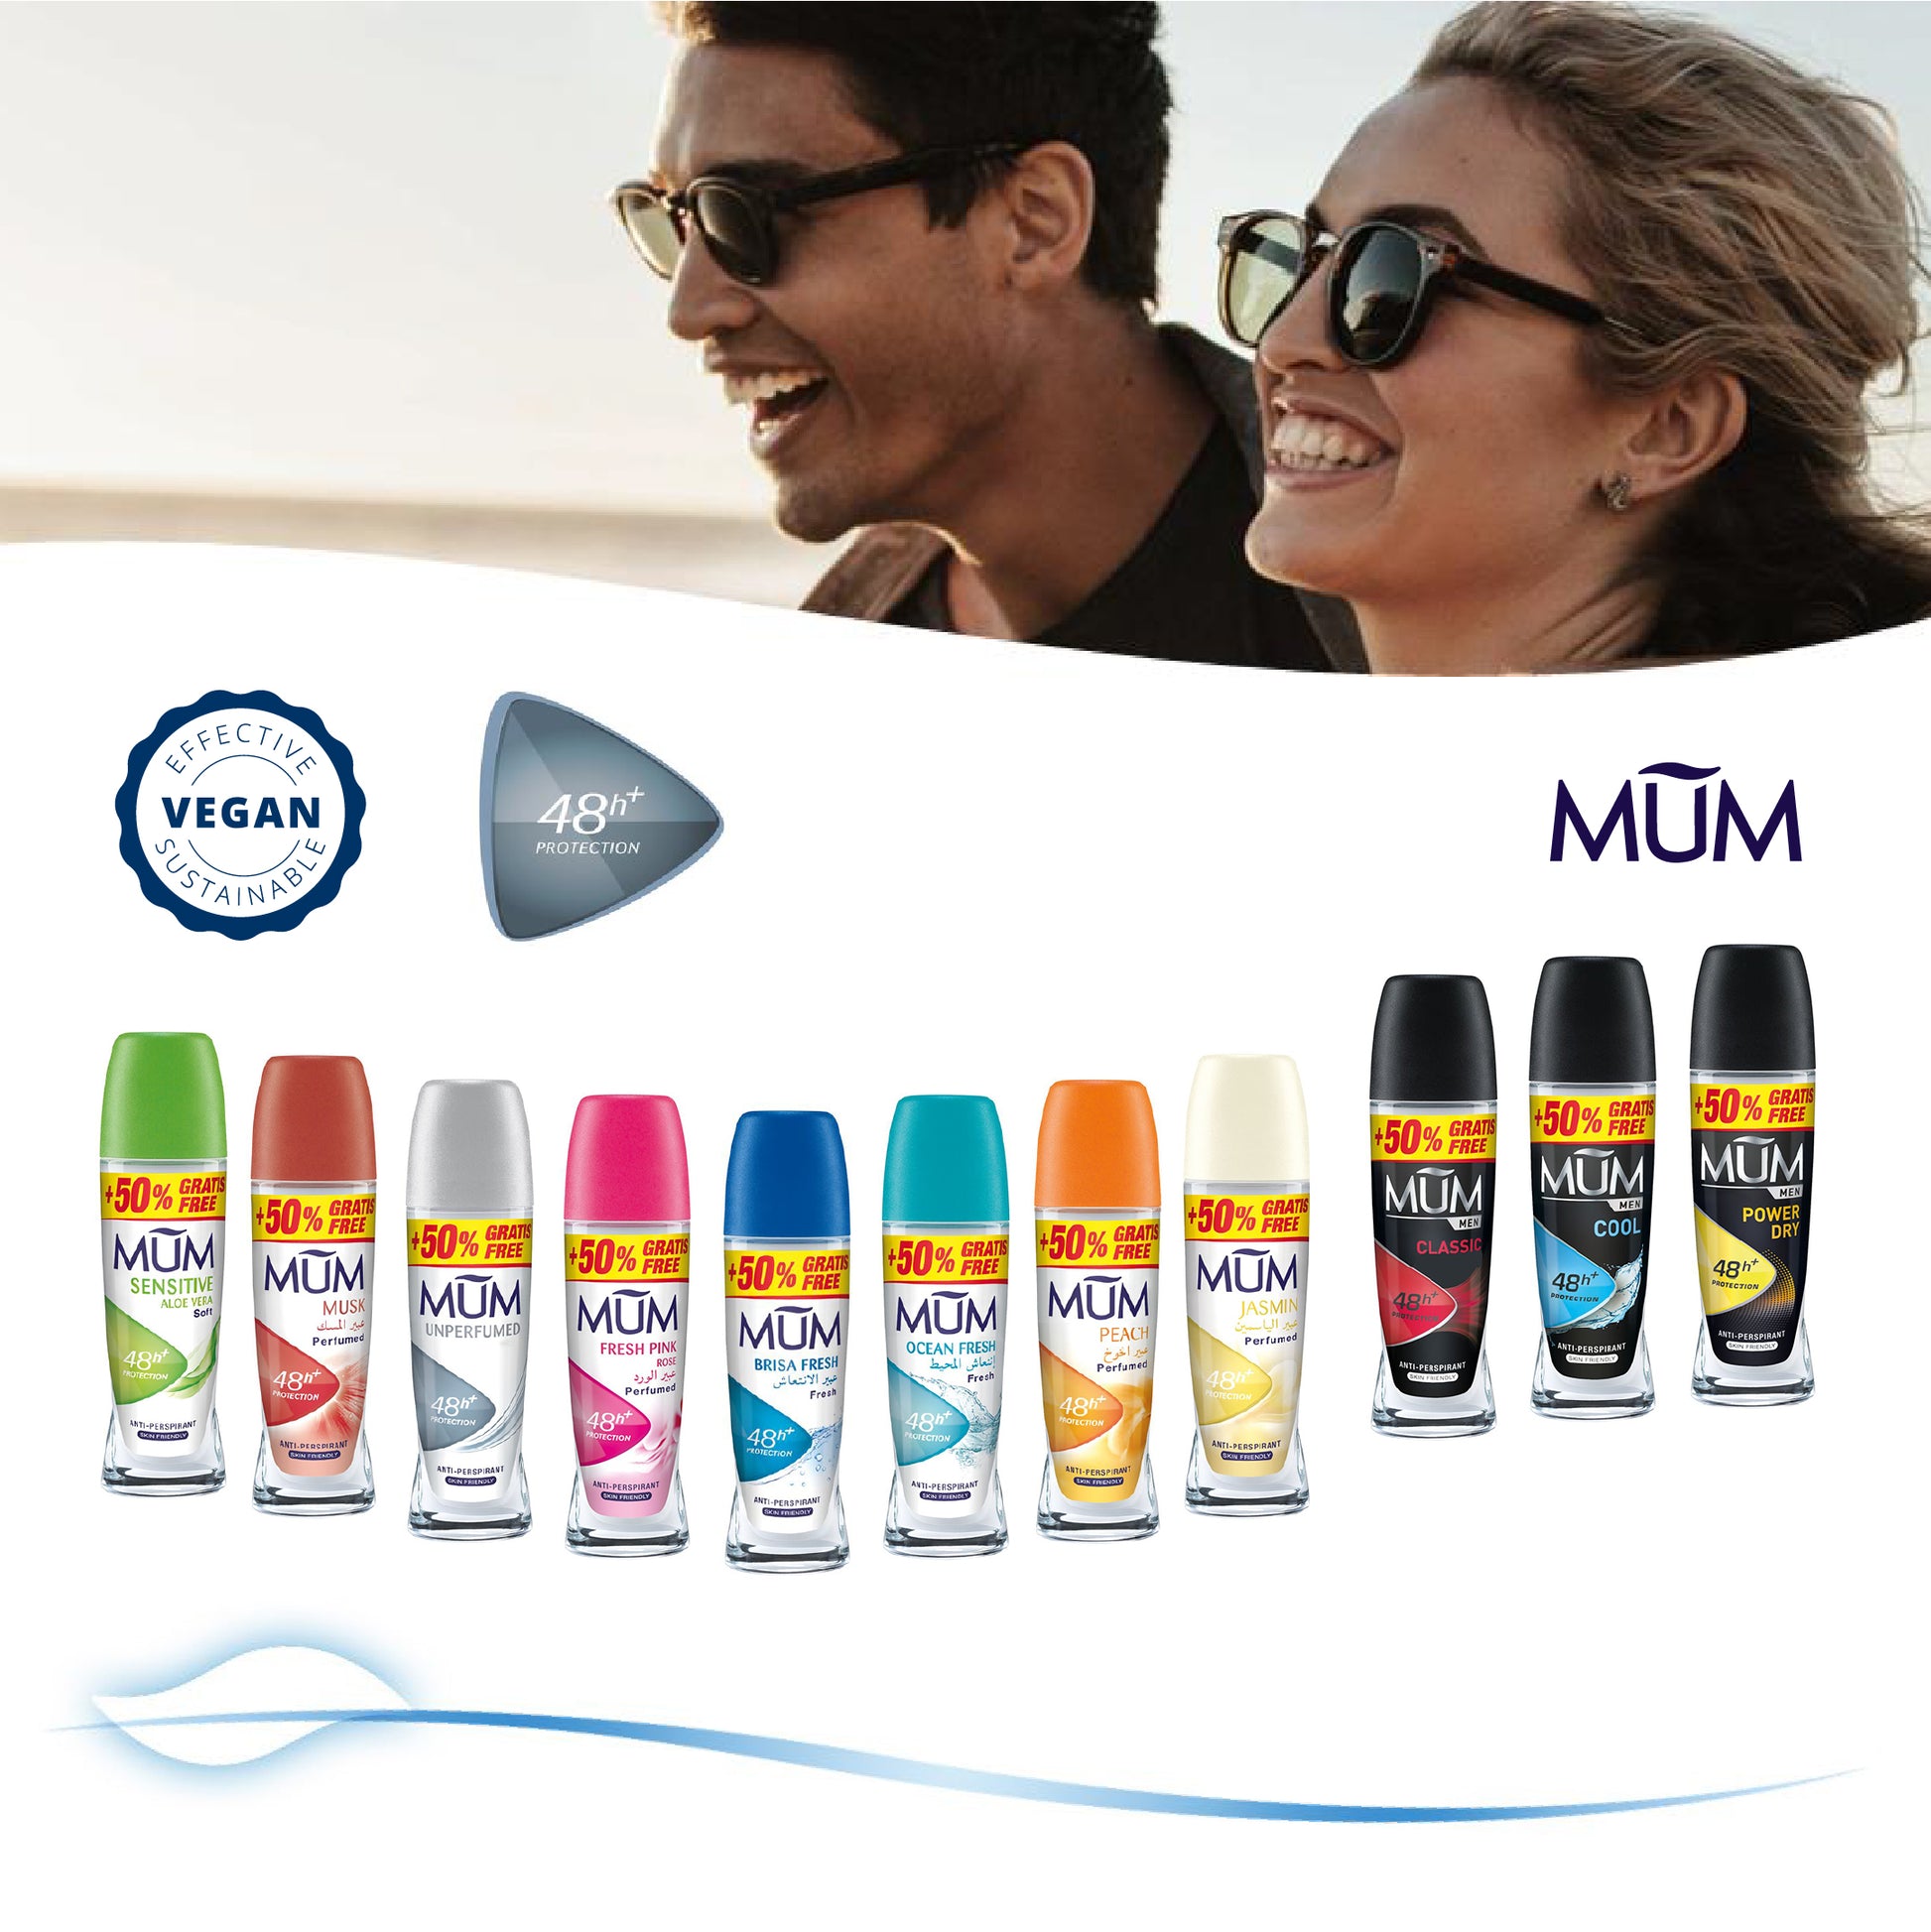 Mum - Deodorant Roll - on 75 ml  - Sensitive Aloe Vera